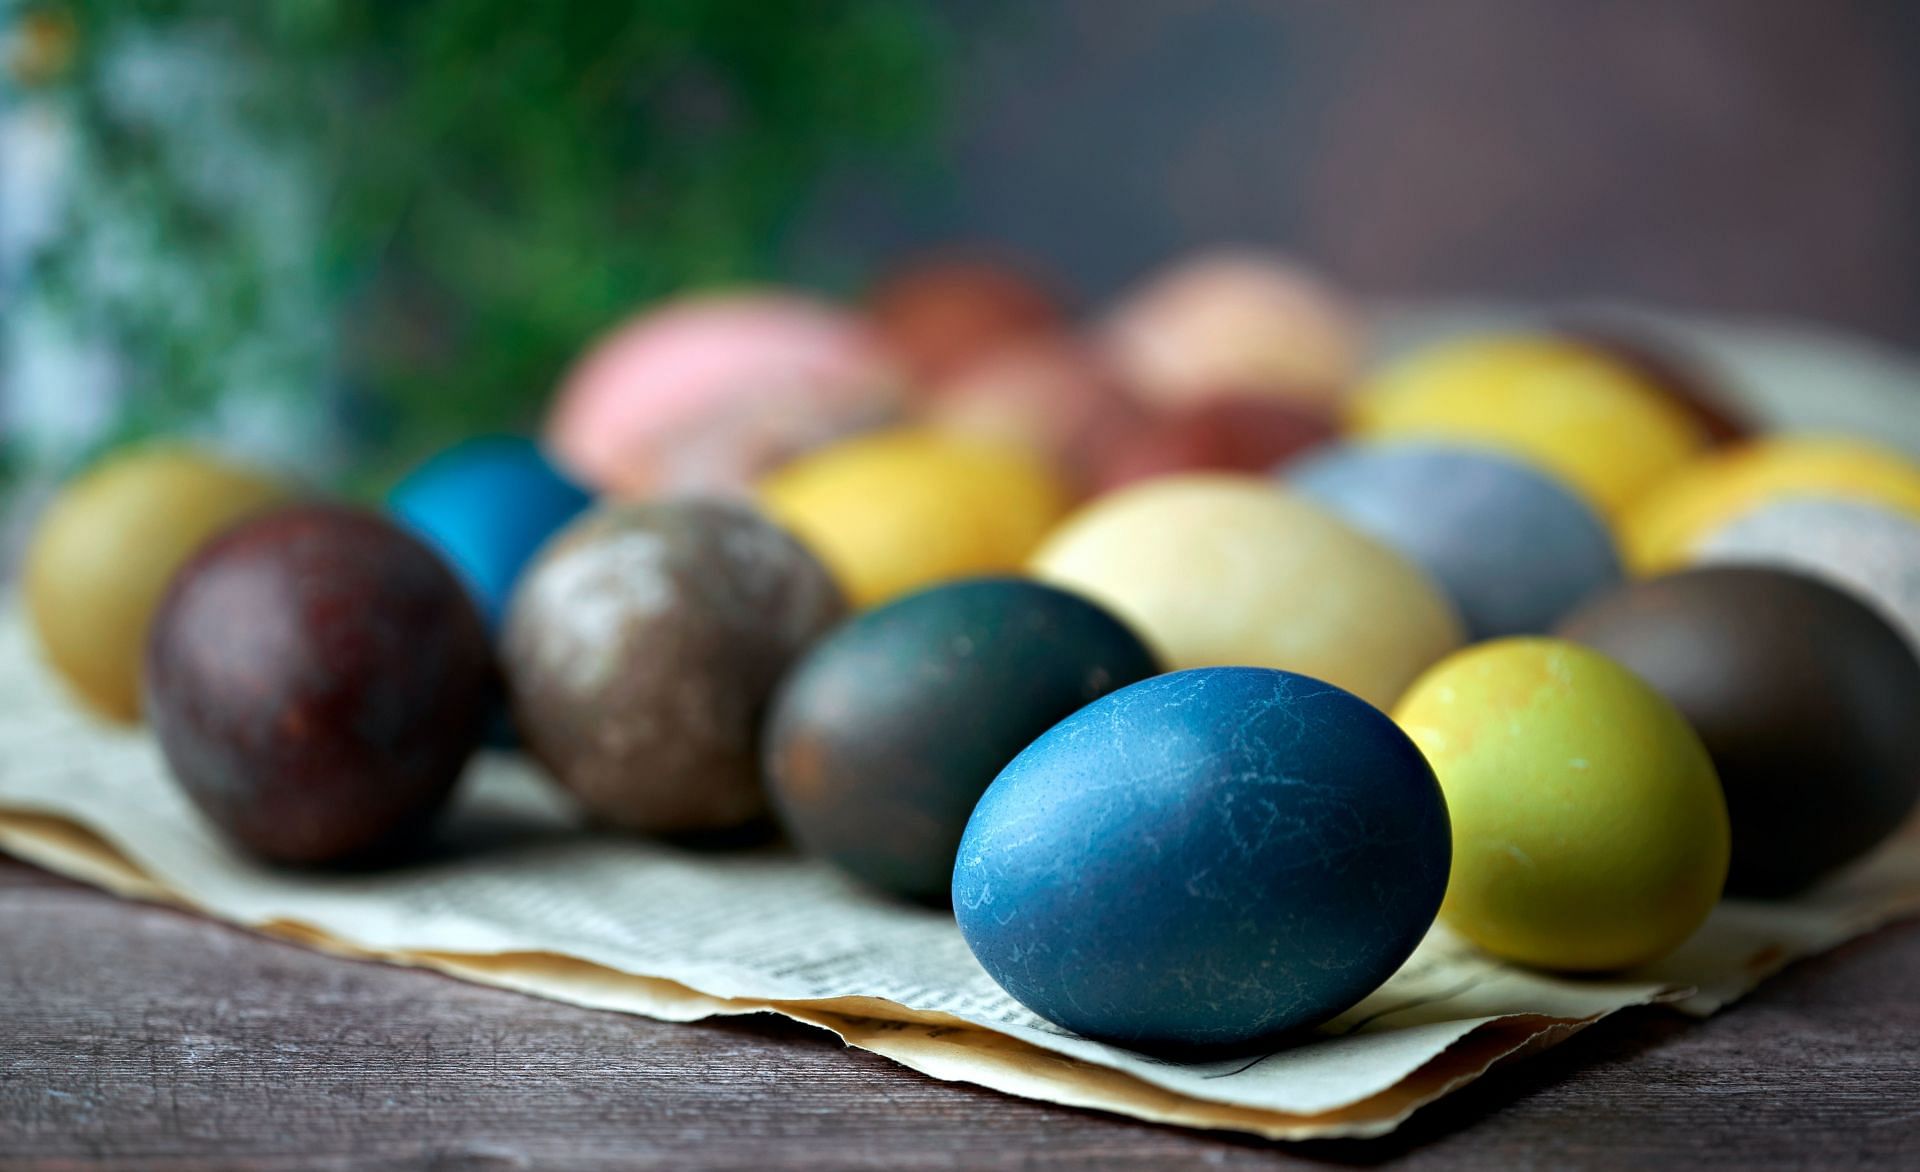 Dyed easter egg might cause allergies. (Image via unsplash / rasa kasparaviciene)